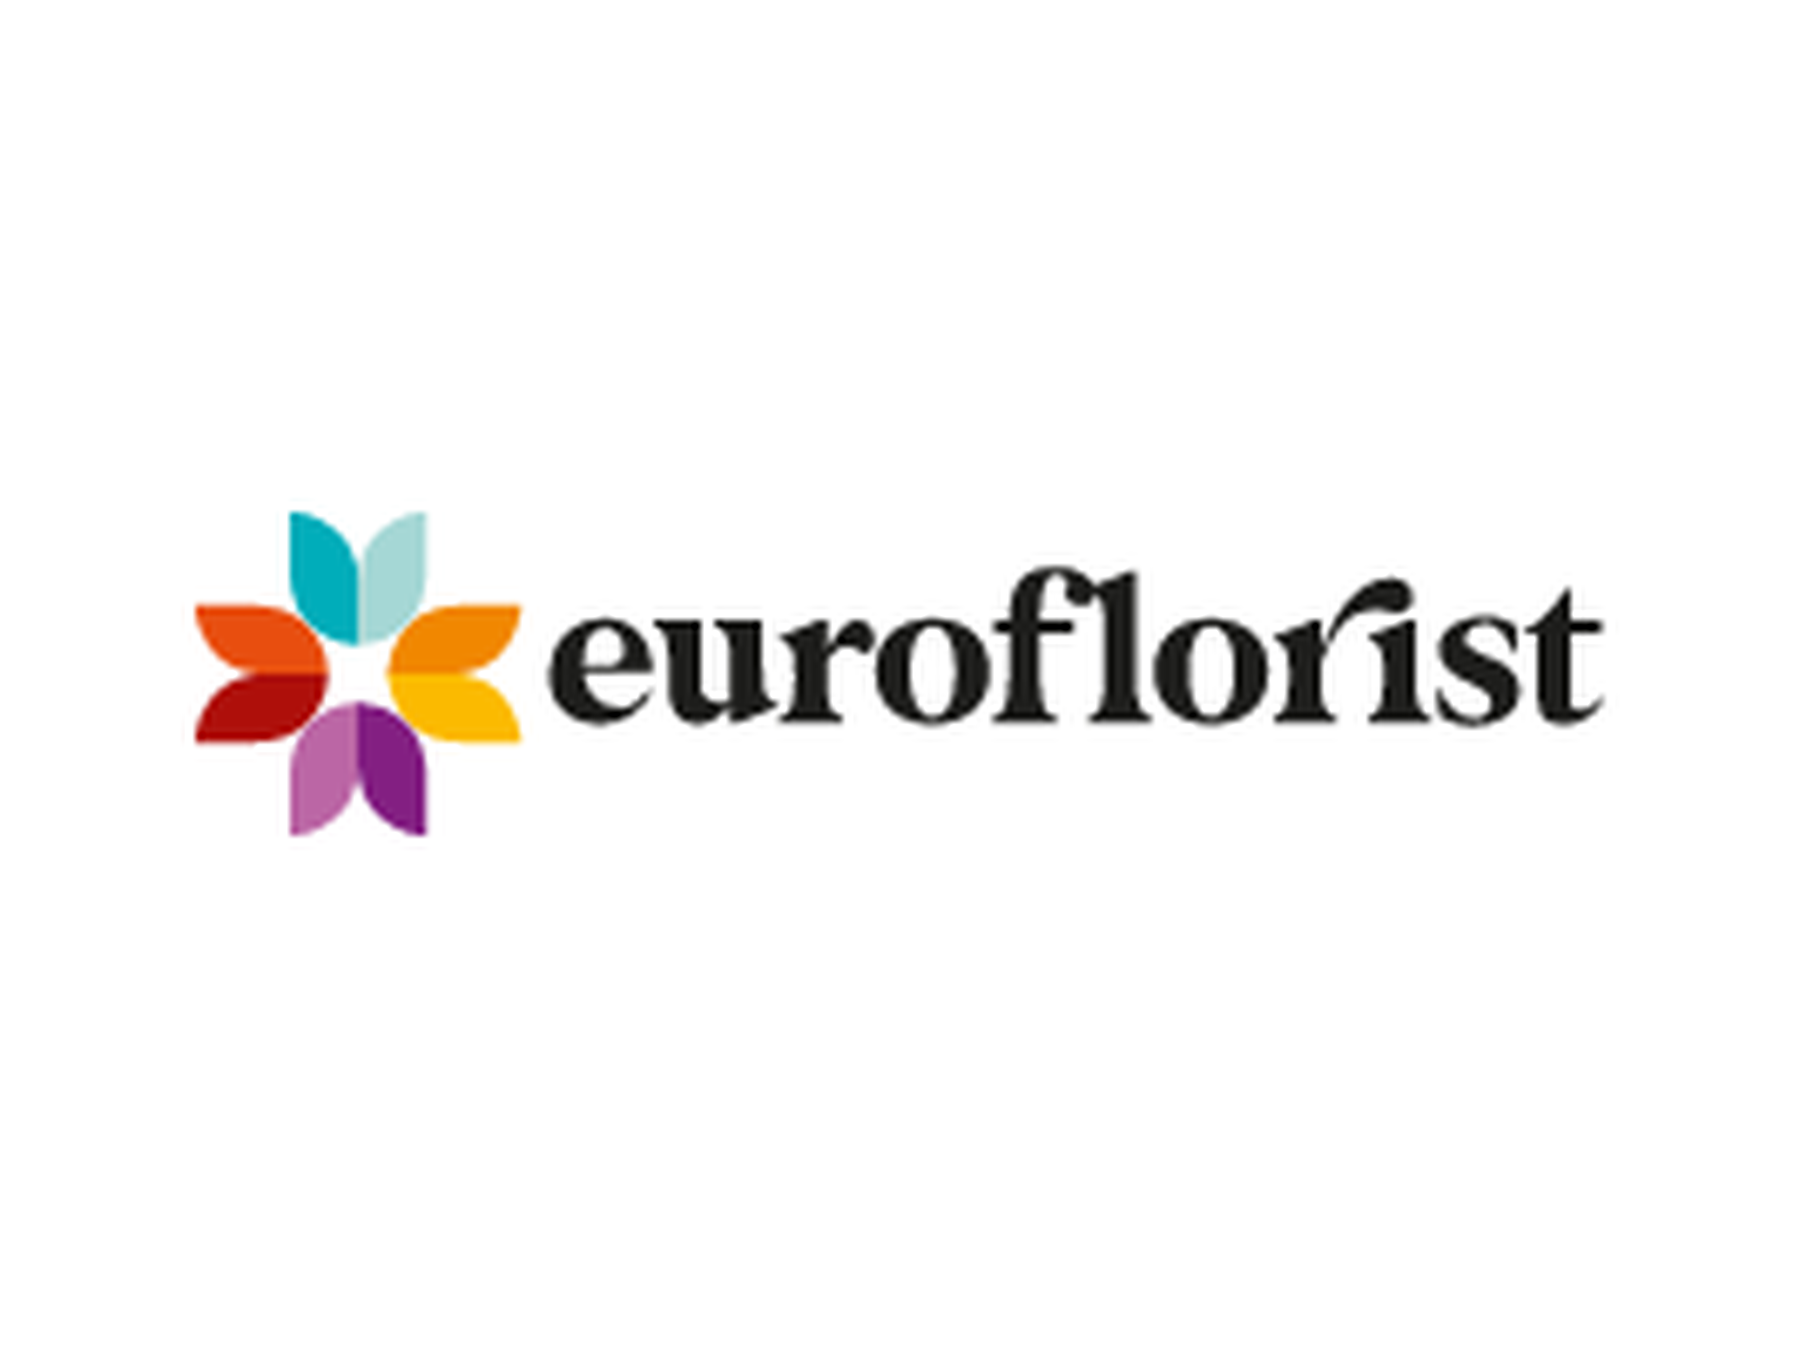 Euroflorist Rabattcode